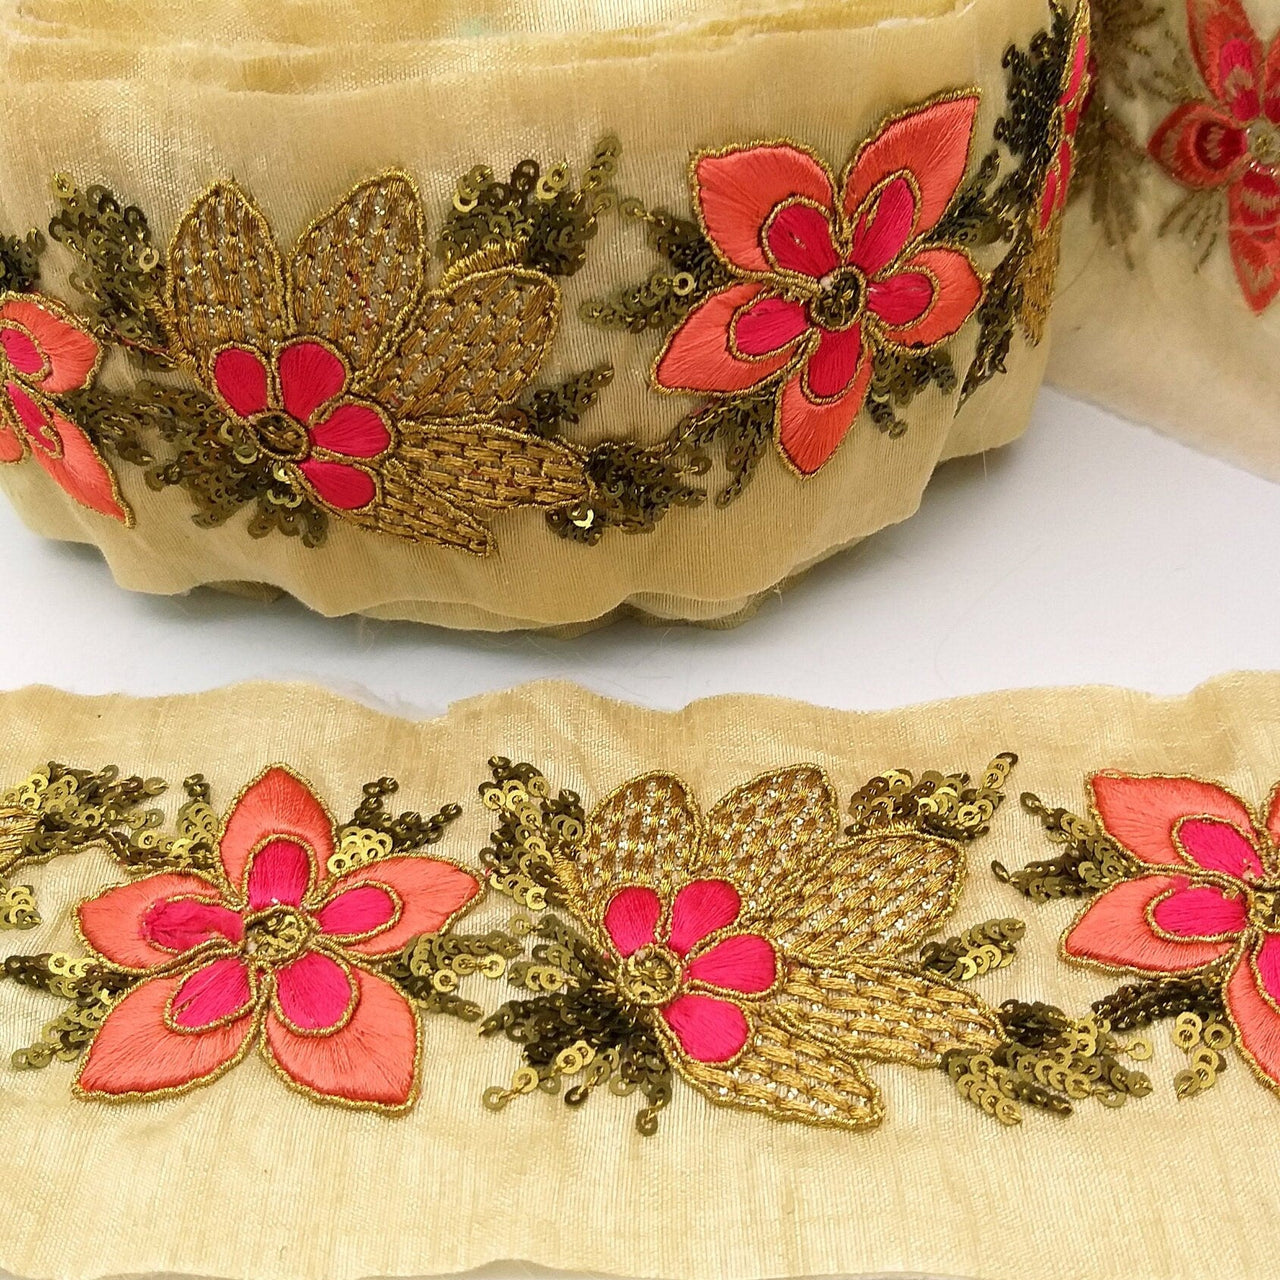 Beige Silk Fabric Trim, Peach, Pink & Gold Floral Embroidery Indian Sari Border Trim By Yard Decorative Trim Craft Lace